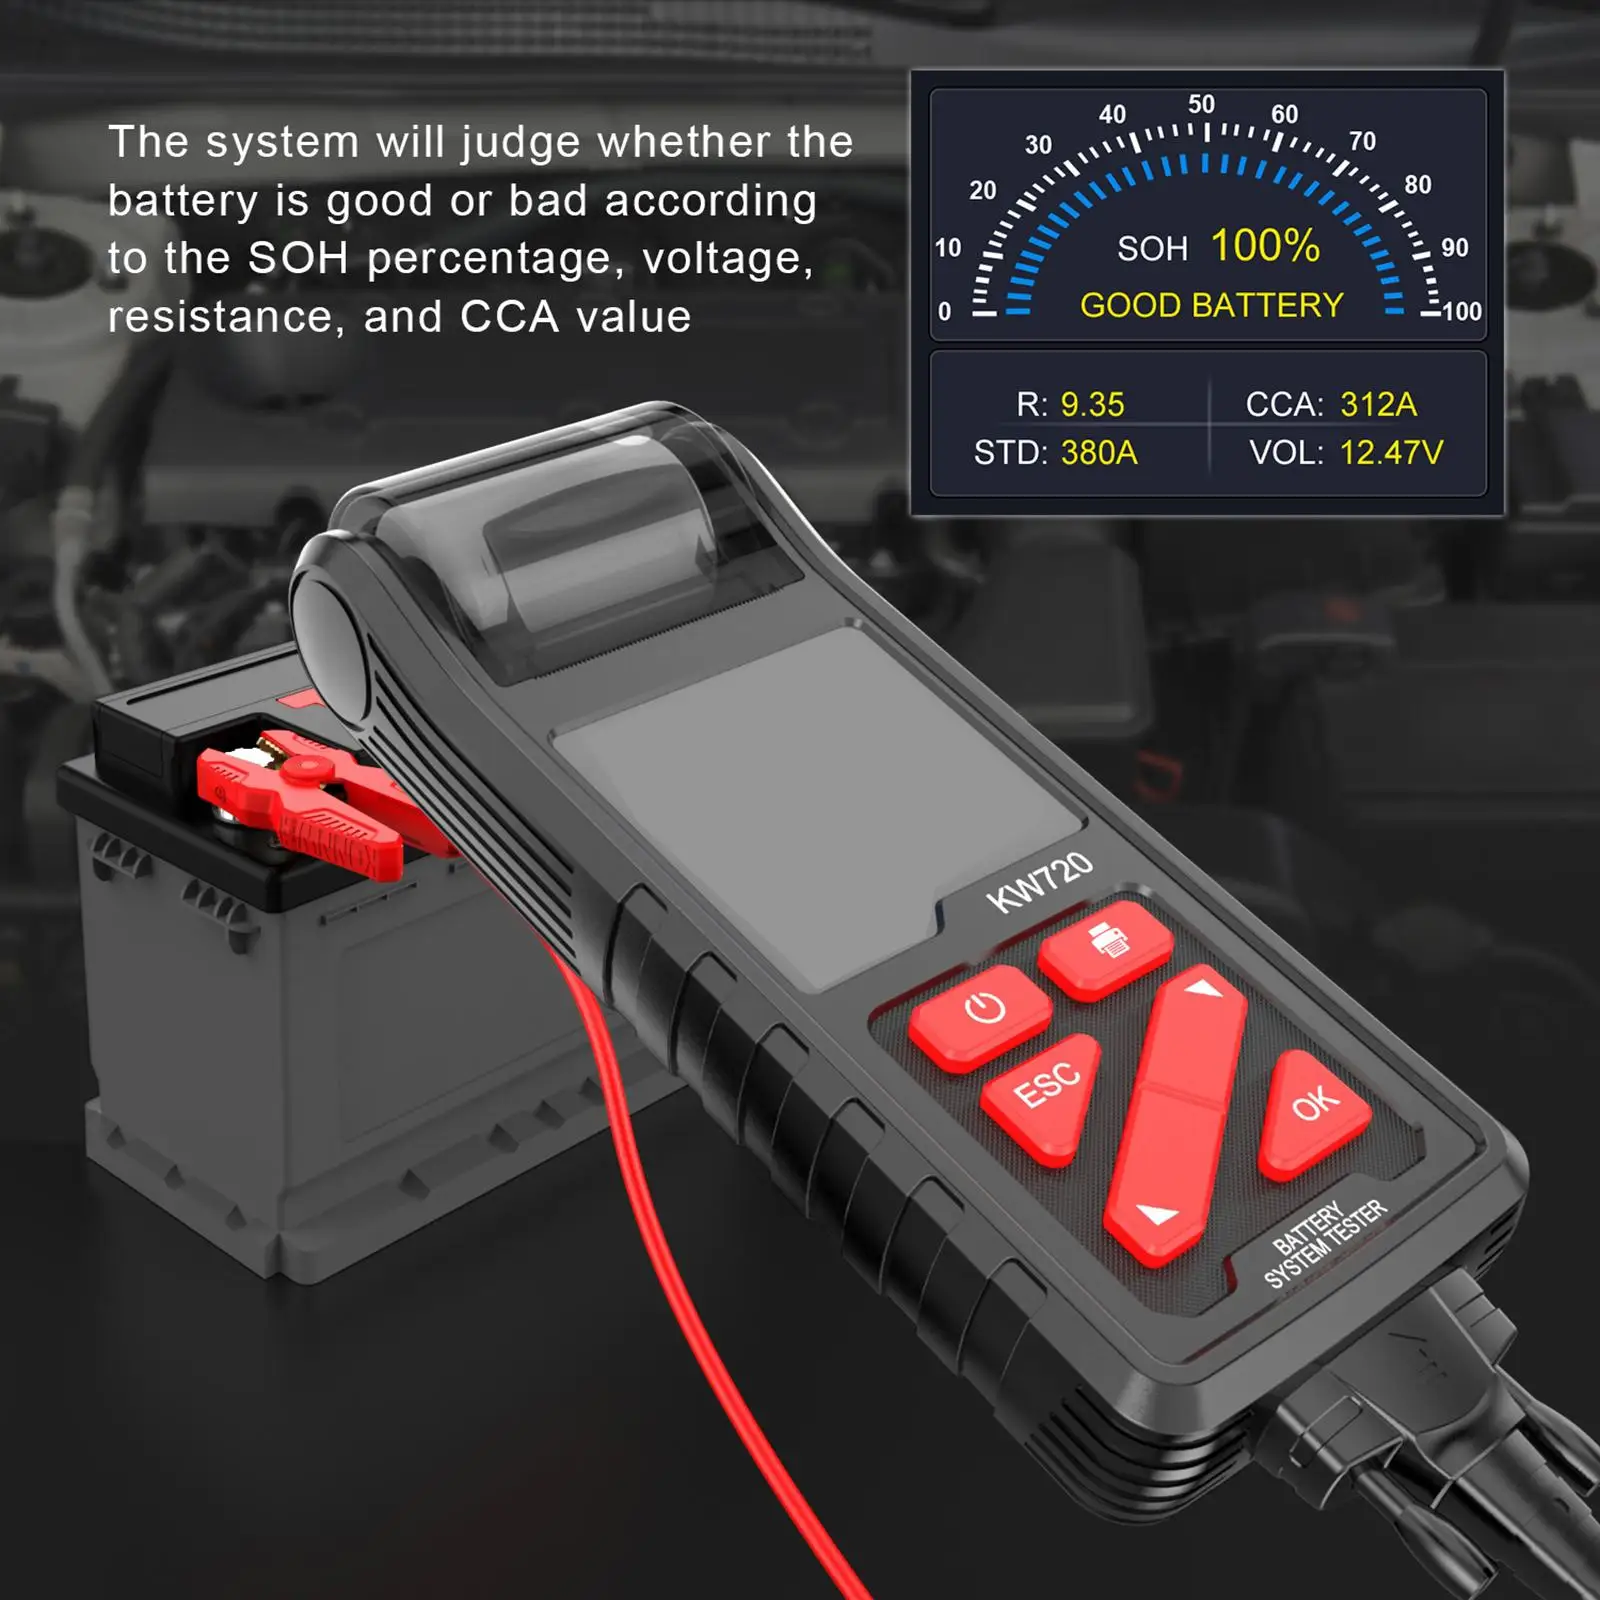 kW720 Car Battery Analyzer Tester Truck Marine Cranking Charging System